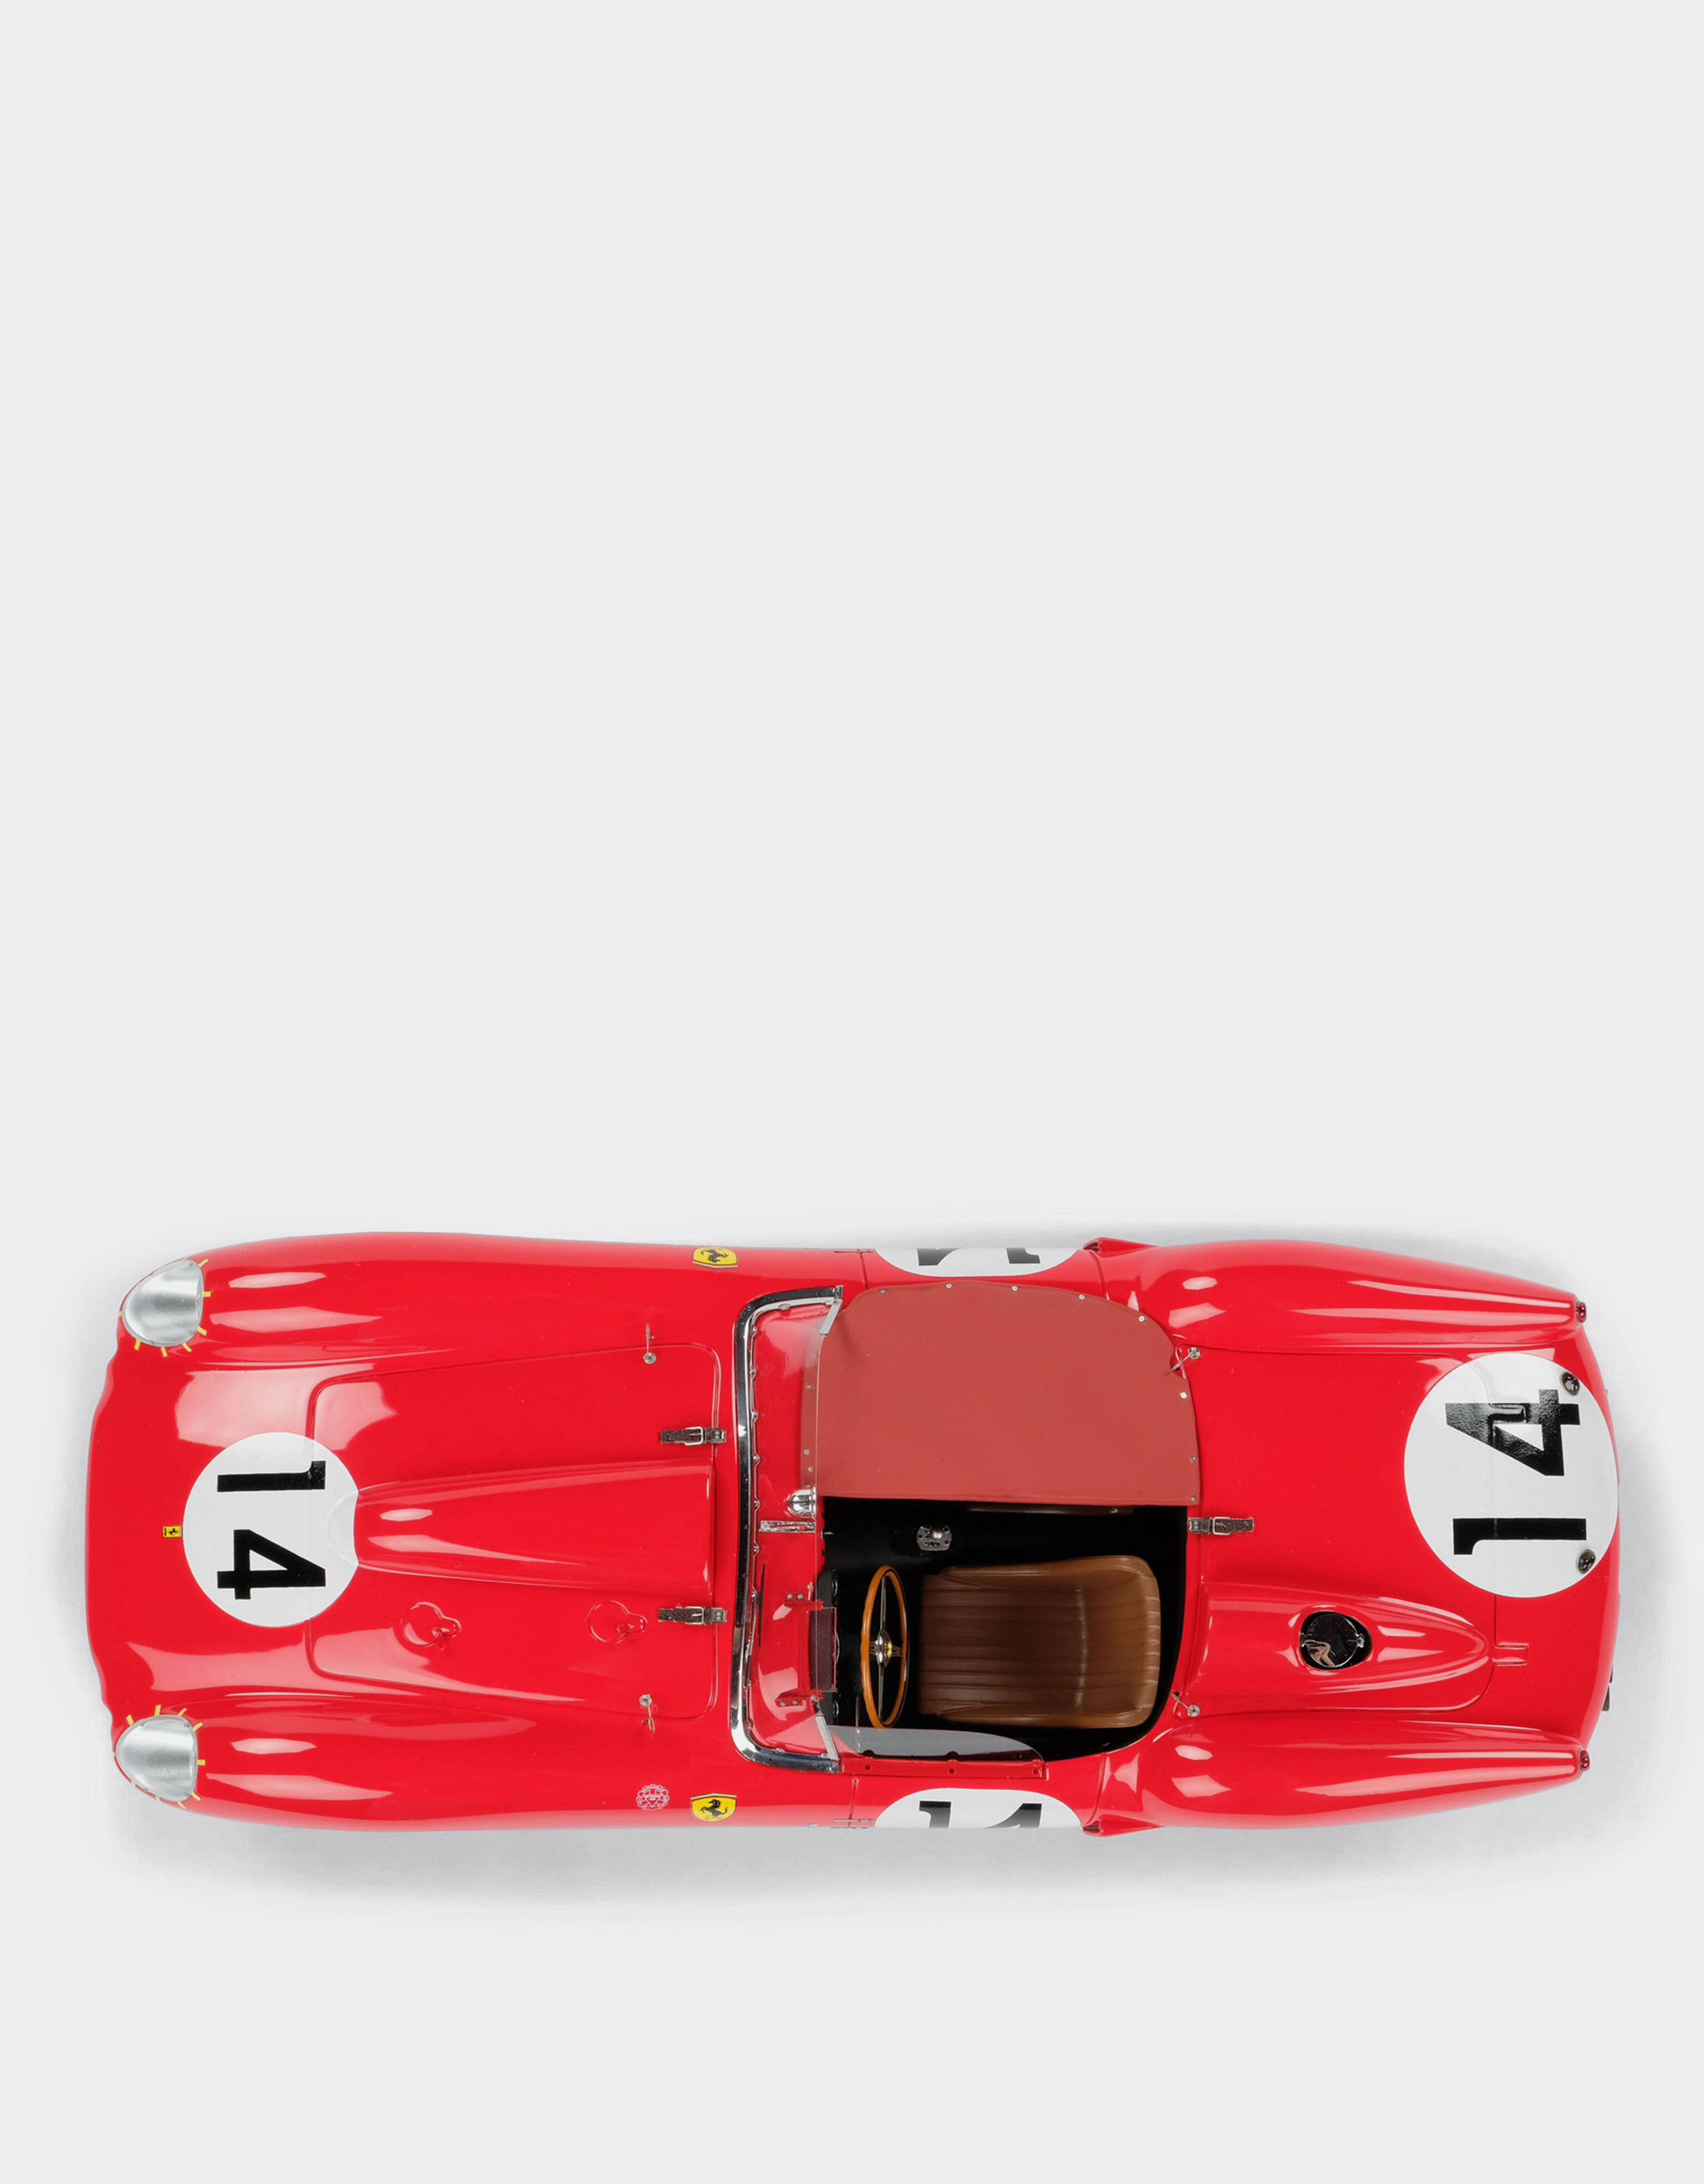 Ferrari Modellauto Ferrari 250 TR 1958 Le Mans im Maßstab 1:18 Rot L7580f